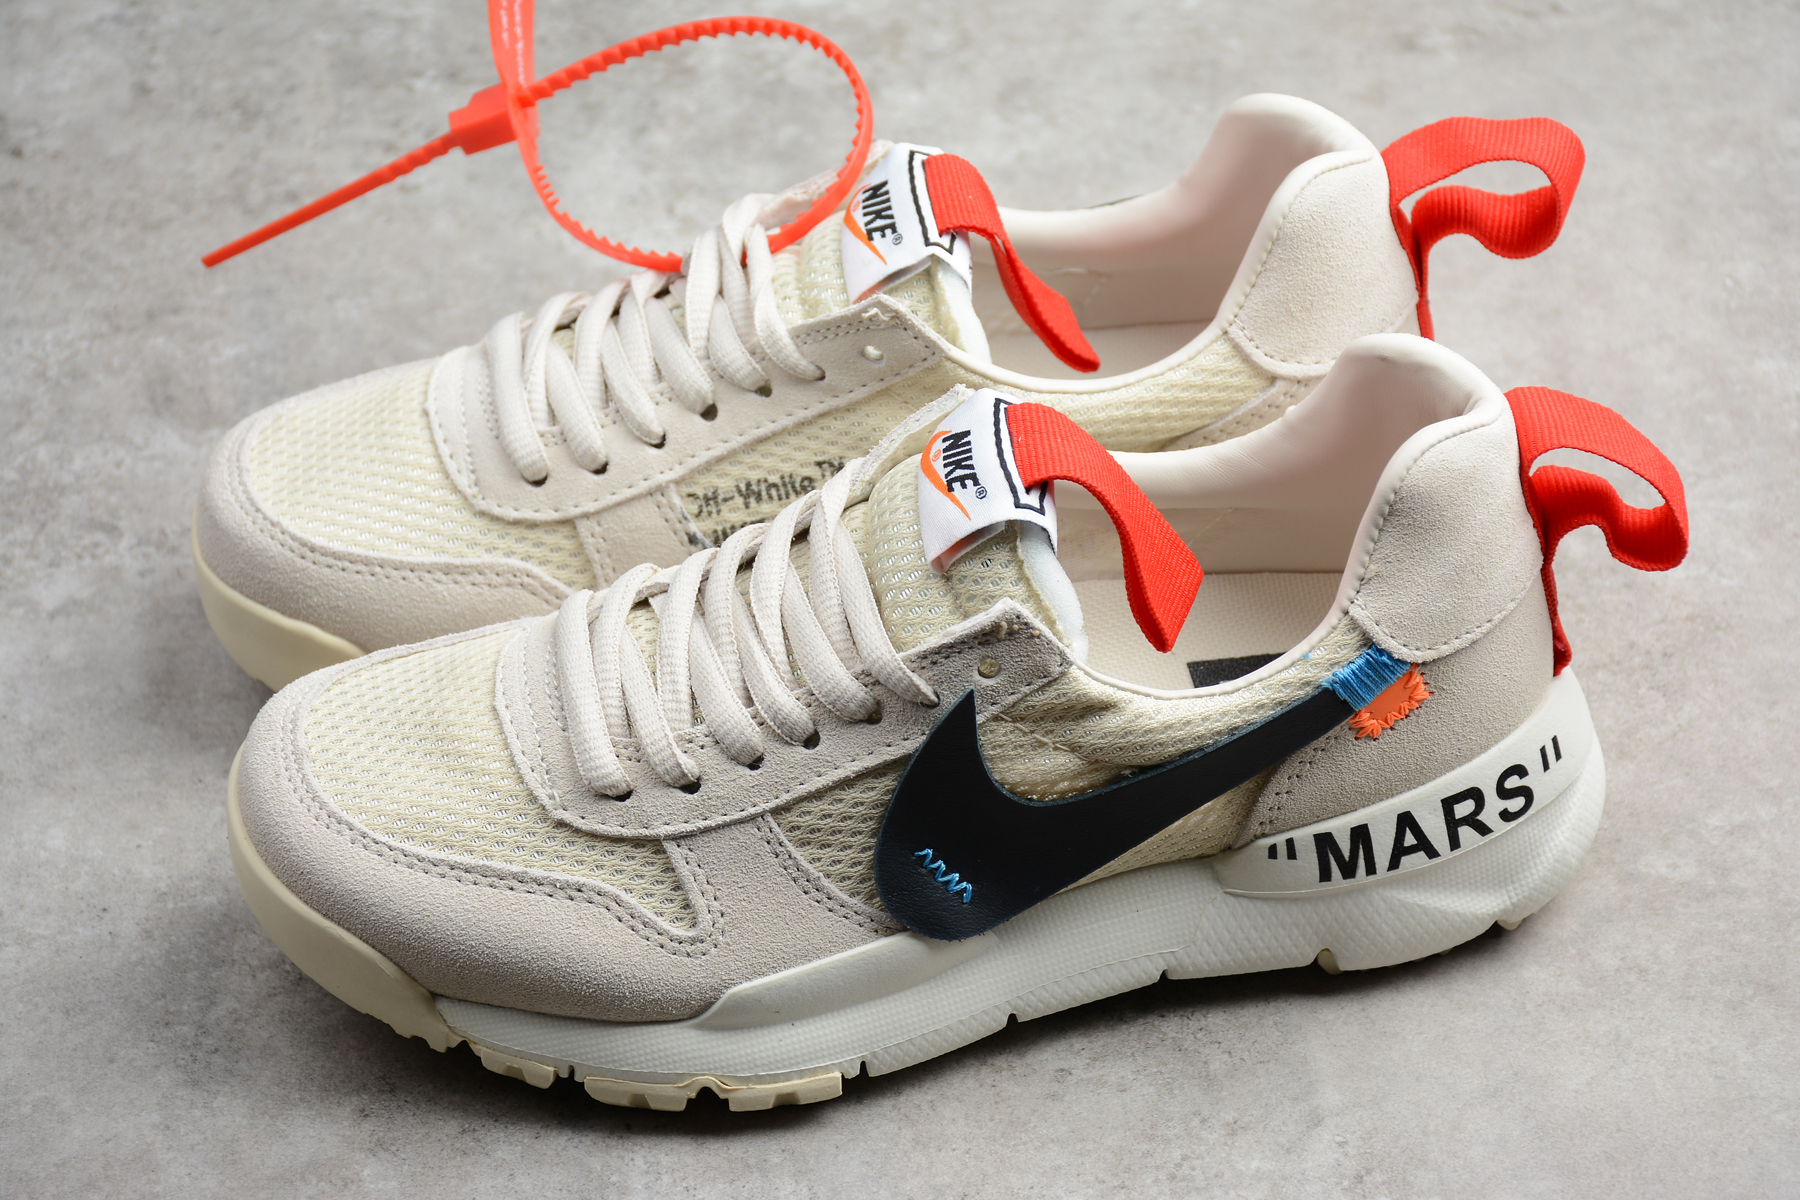 Реплика кроссовок купить в москве. Nike Mars Yard 2.0. Nike Mars Yard. Nike Mars Yard x off-White. Nike Tom sachs Mars Yard 2.0.